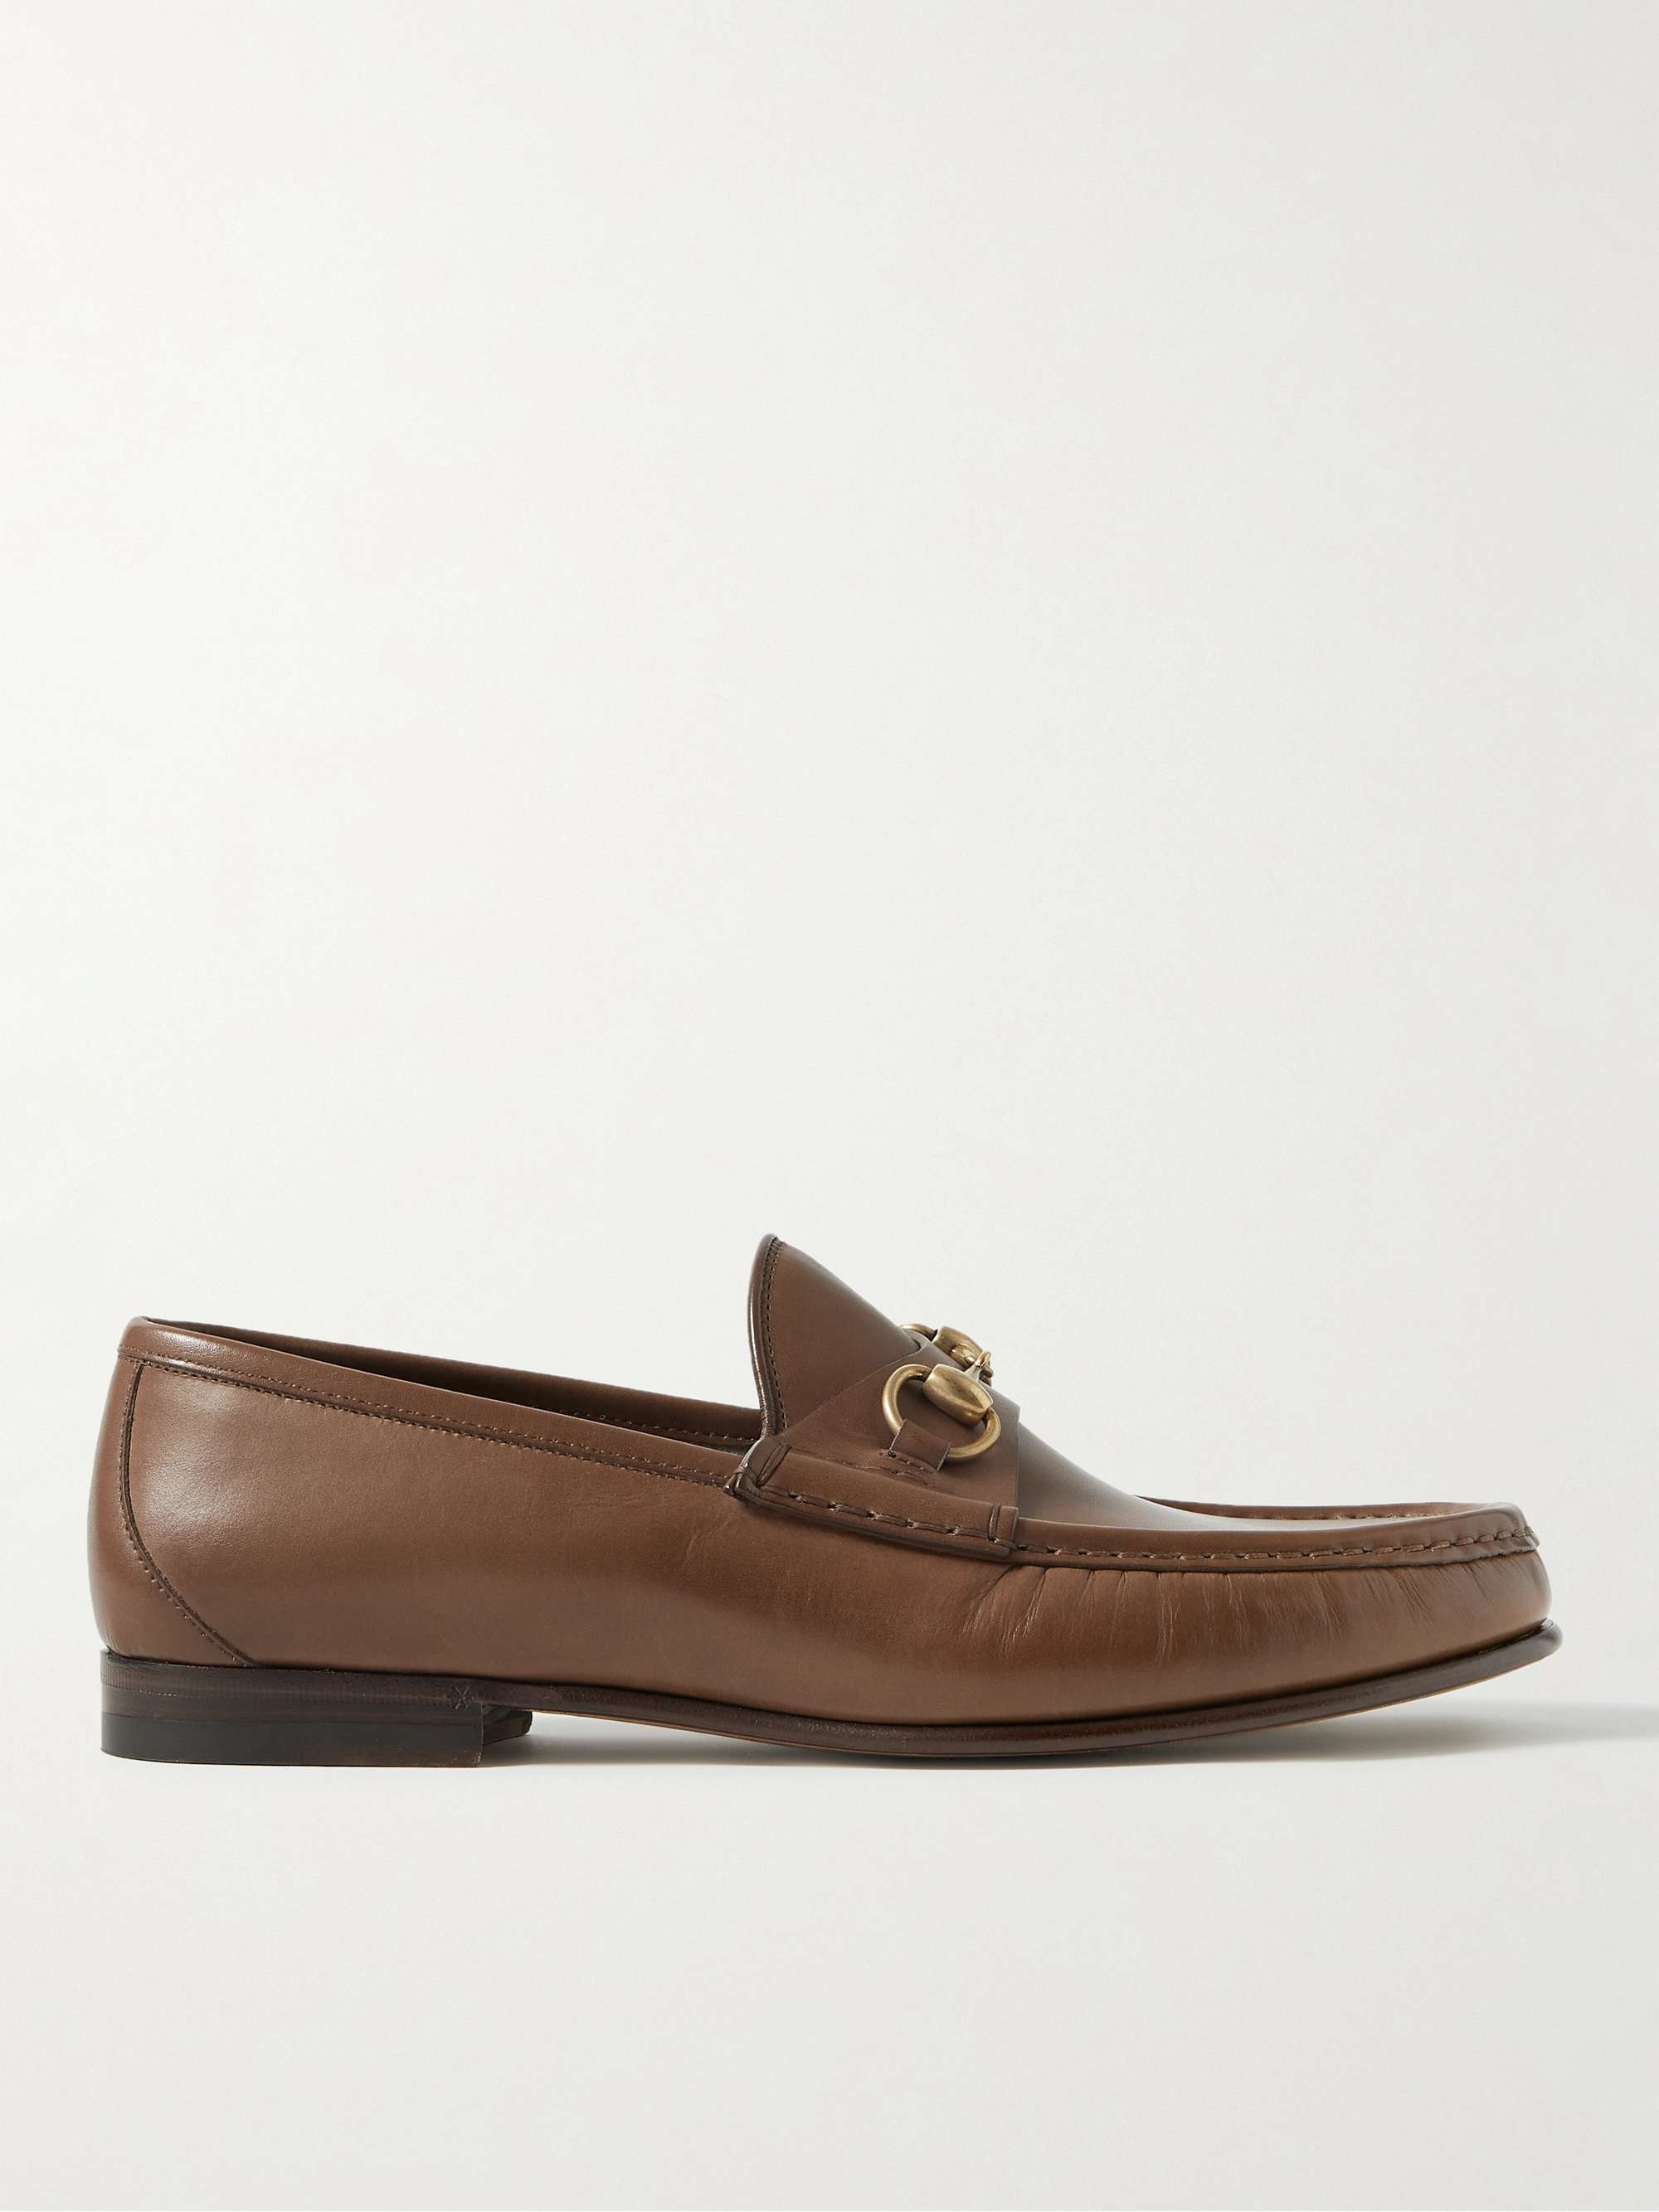 GUCCI Horsebit 1953 Leather Loafers for Men | MR PORTER